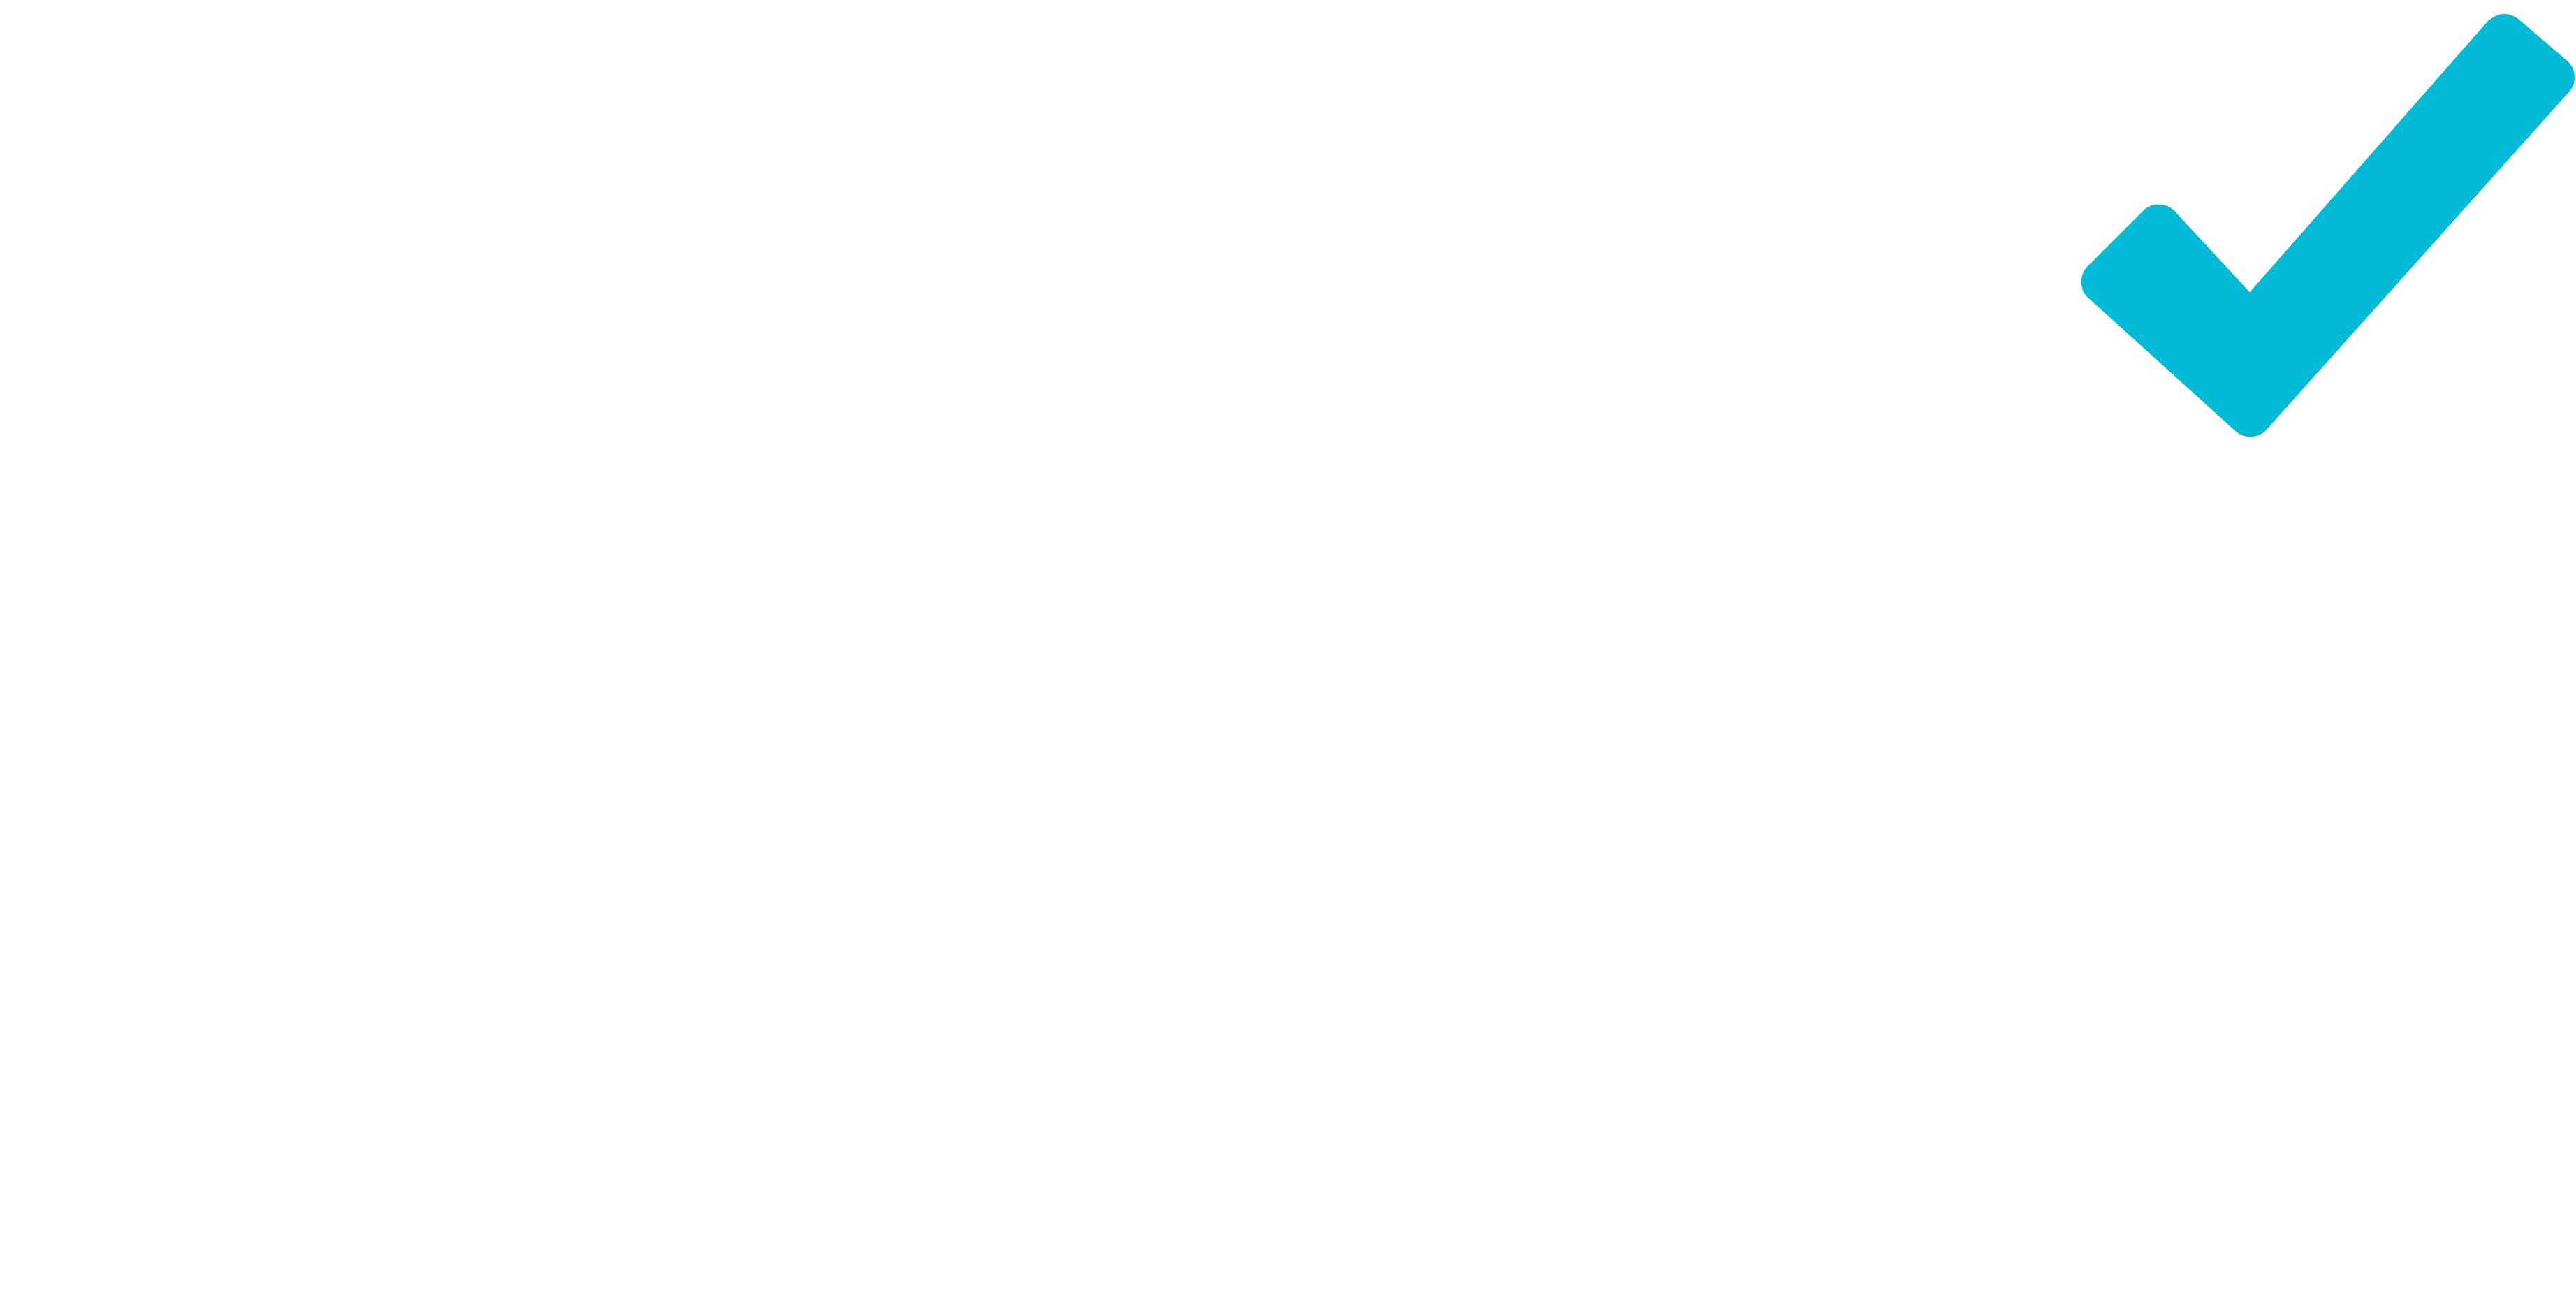 Hyundai Advantage Sales Event